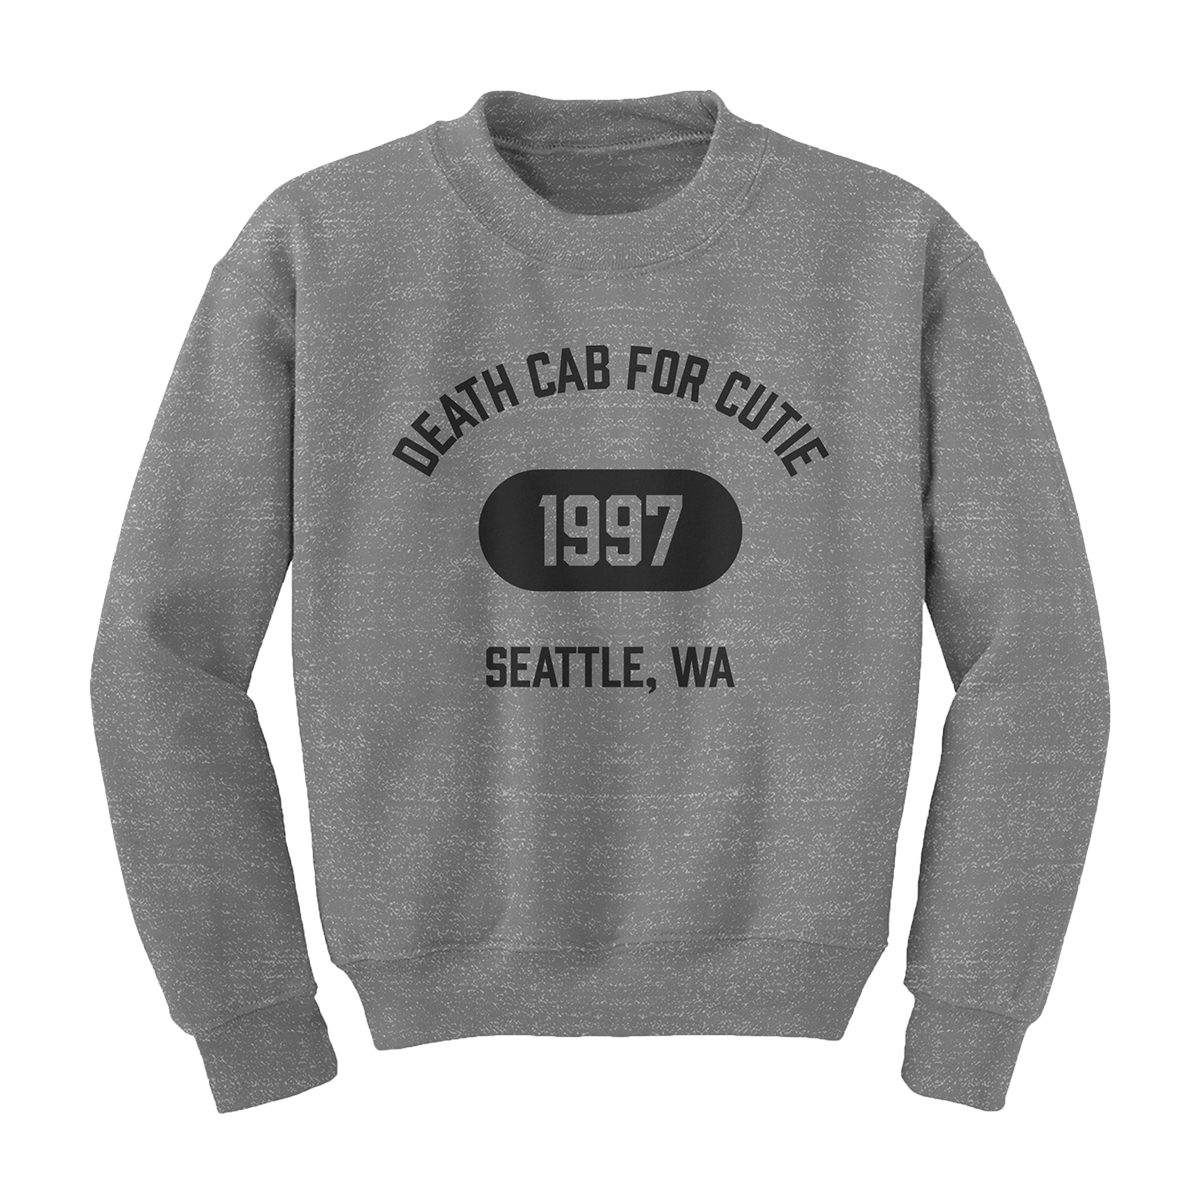 death cab for cutie sweatshirt